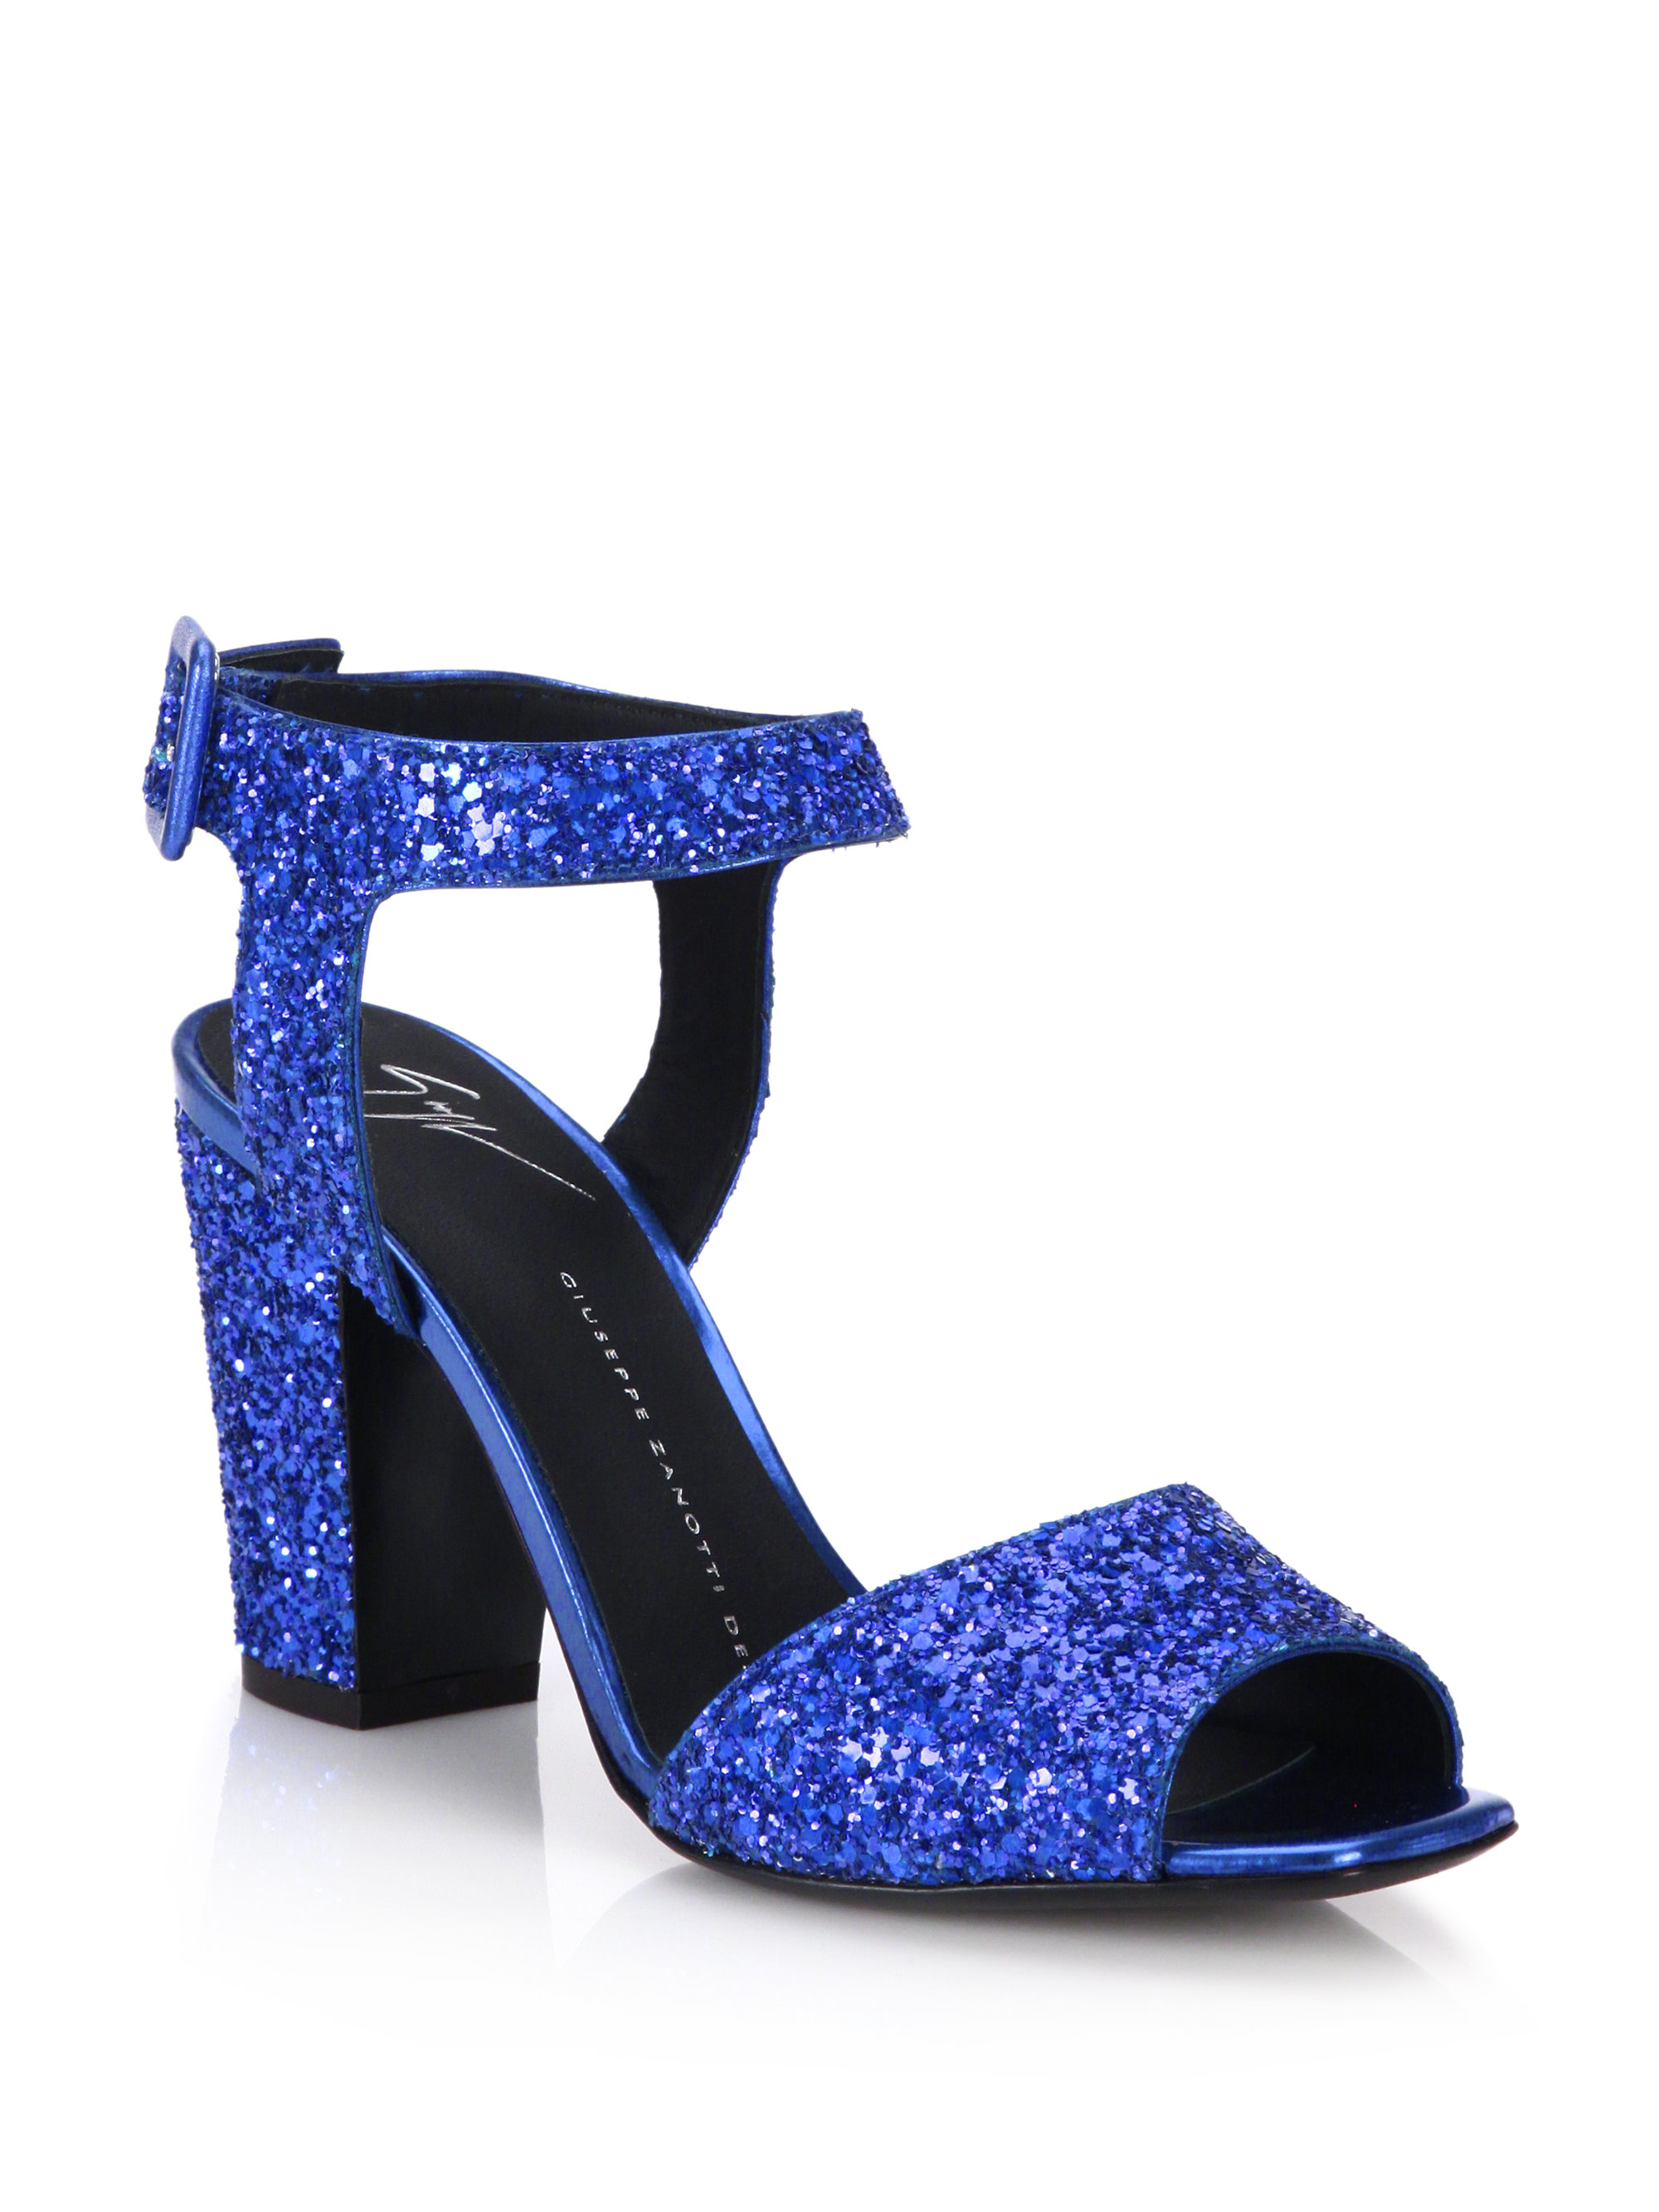 Giuseppe Zanotti Glitter Mid-heel Sandals in Cobalt (Blue) - Lyst